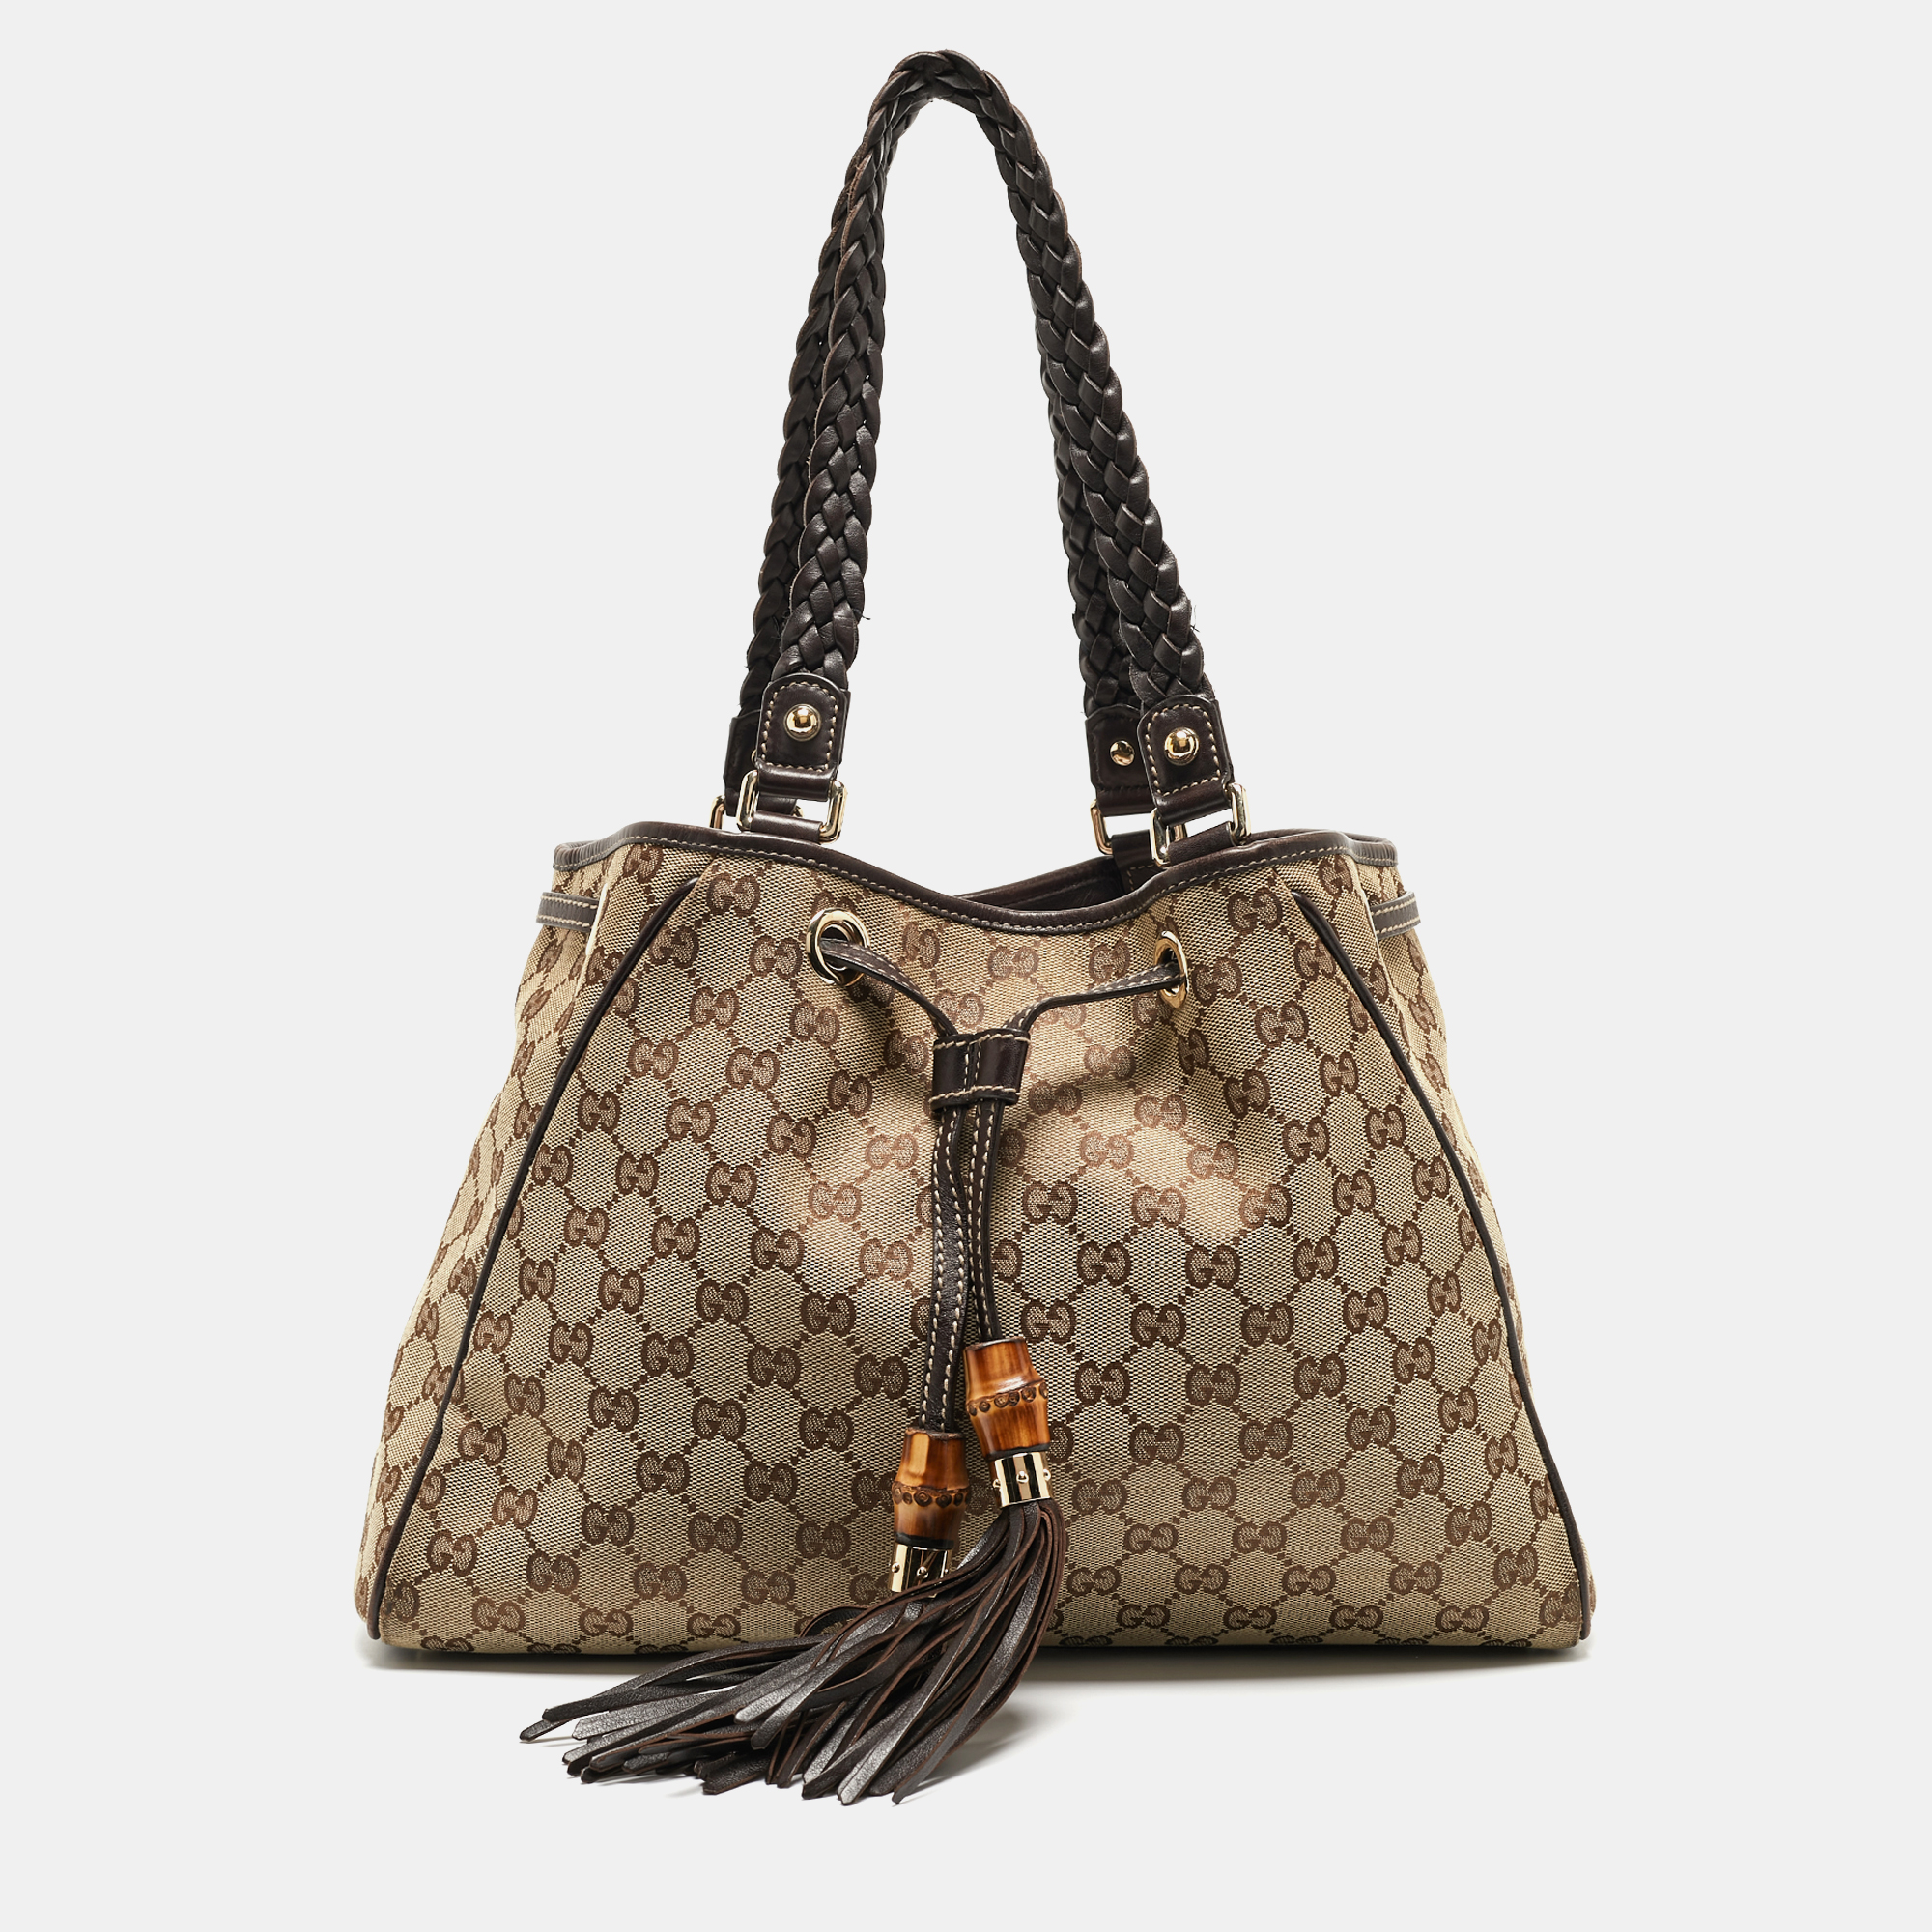 Gucci dark brown/beige gg canvas and leather medium peggy shoulder bag